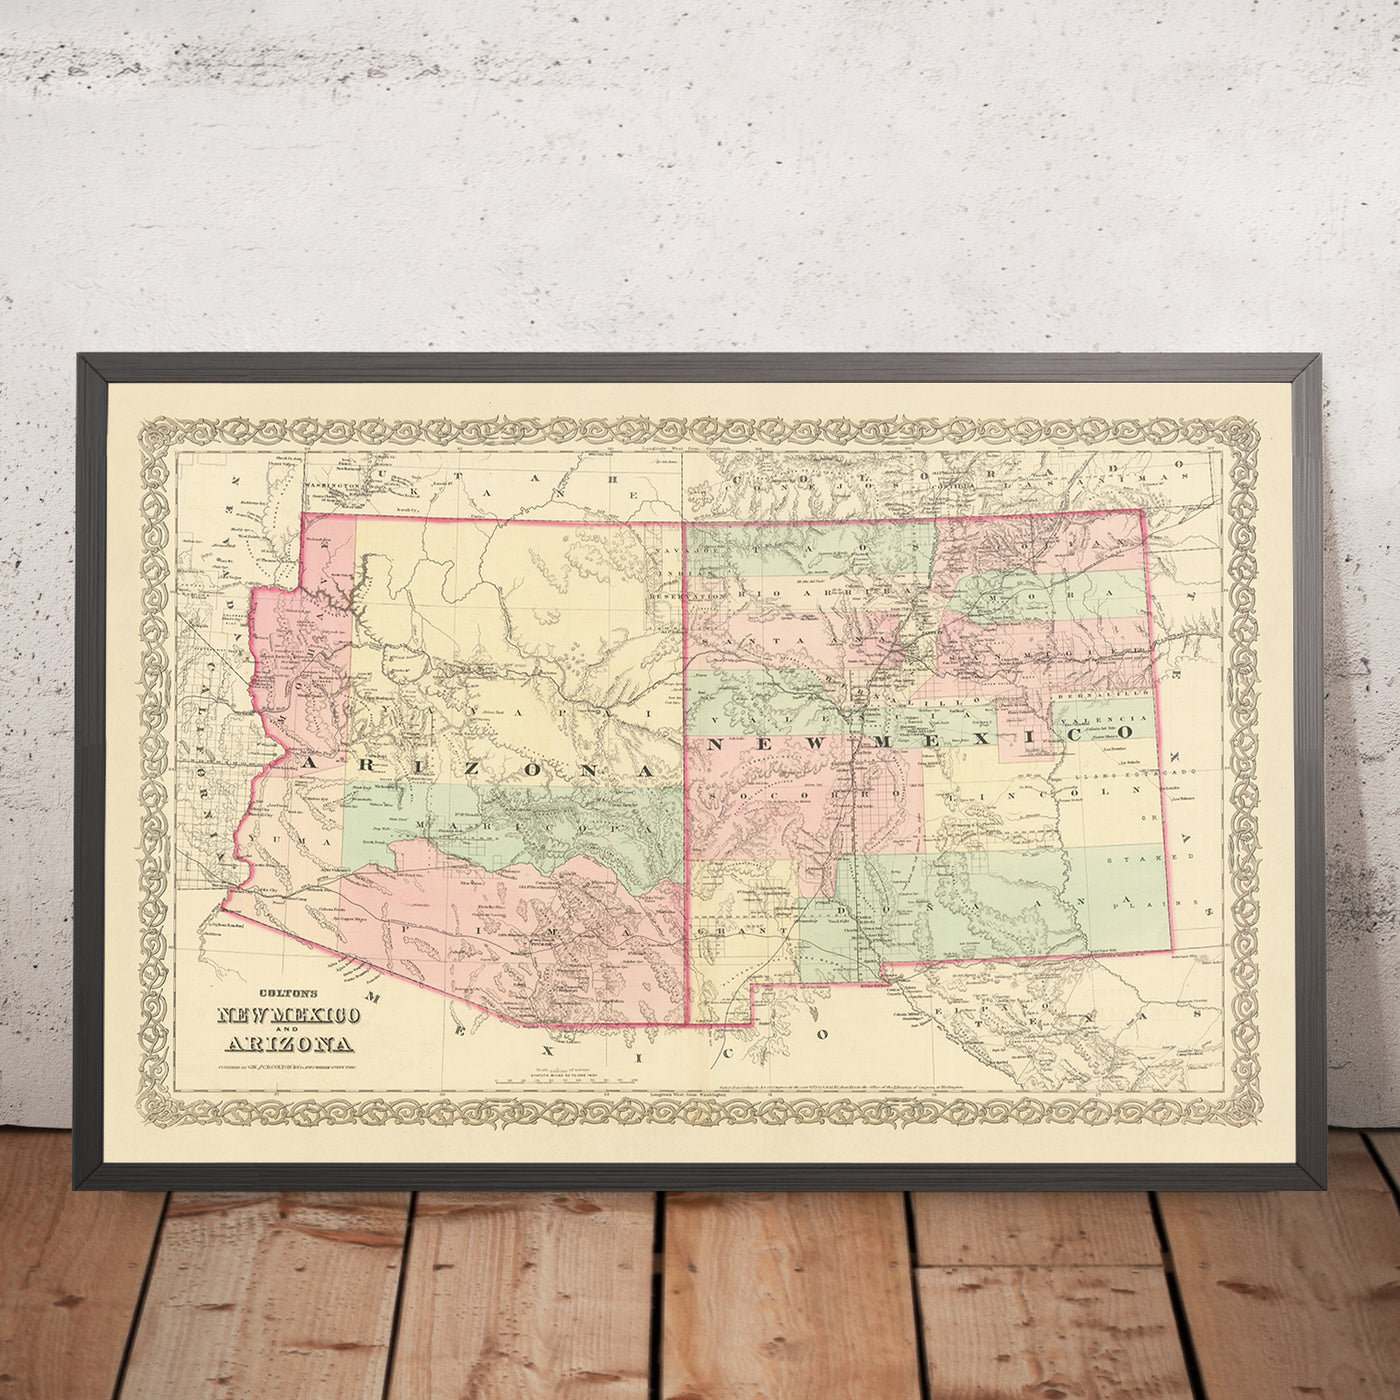 Alte Karte von New Mexico und Arizona von Colton, 1873: Santa Fe, Tucson, Albuquerque, Prescott und Mesilla